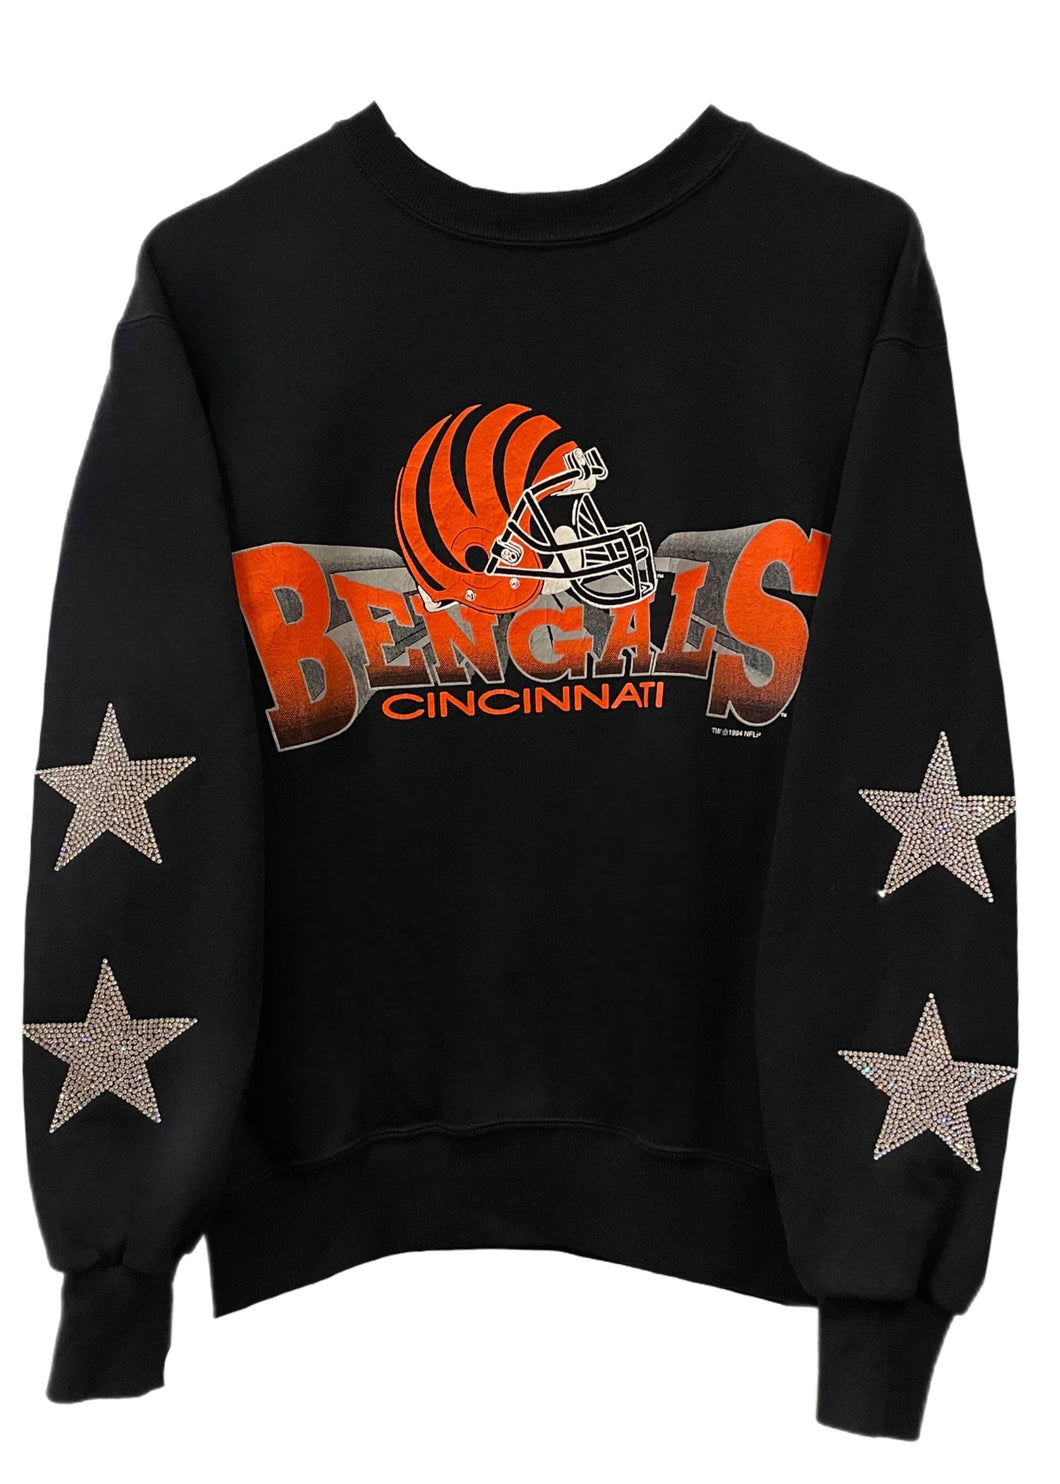 Cincinnati Bengals, NFL One of a KIND Vintage Sweatshirt with Crystal Star Design